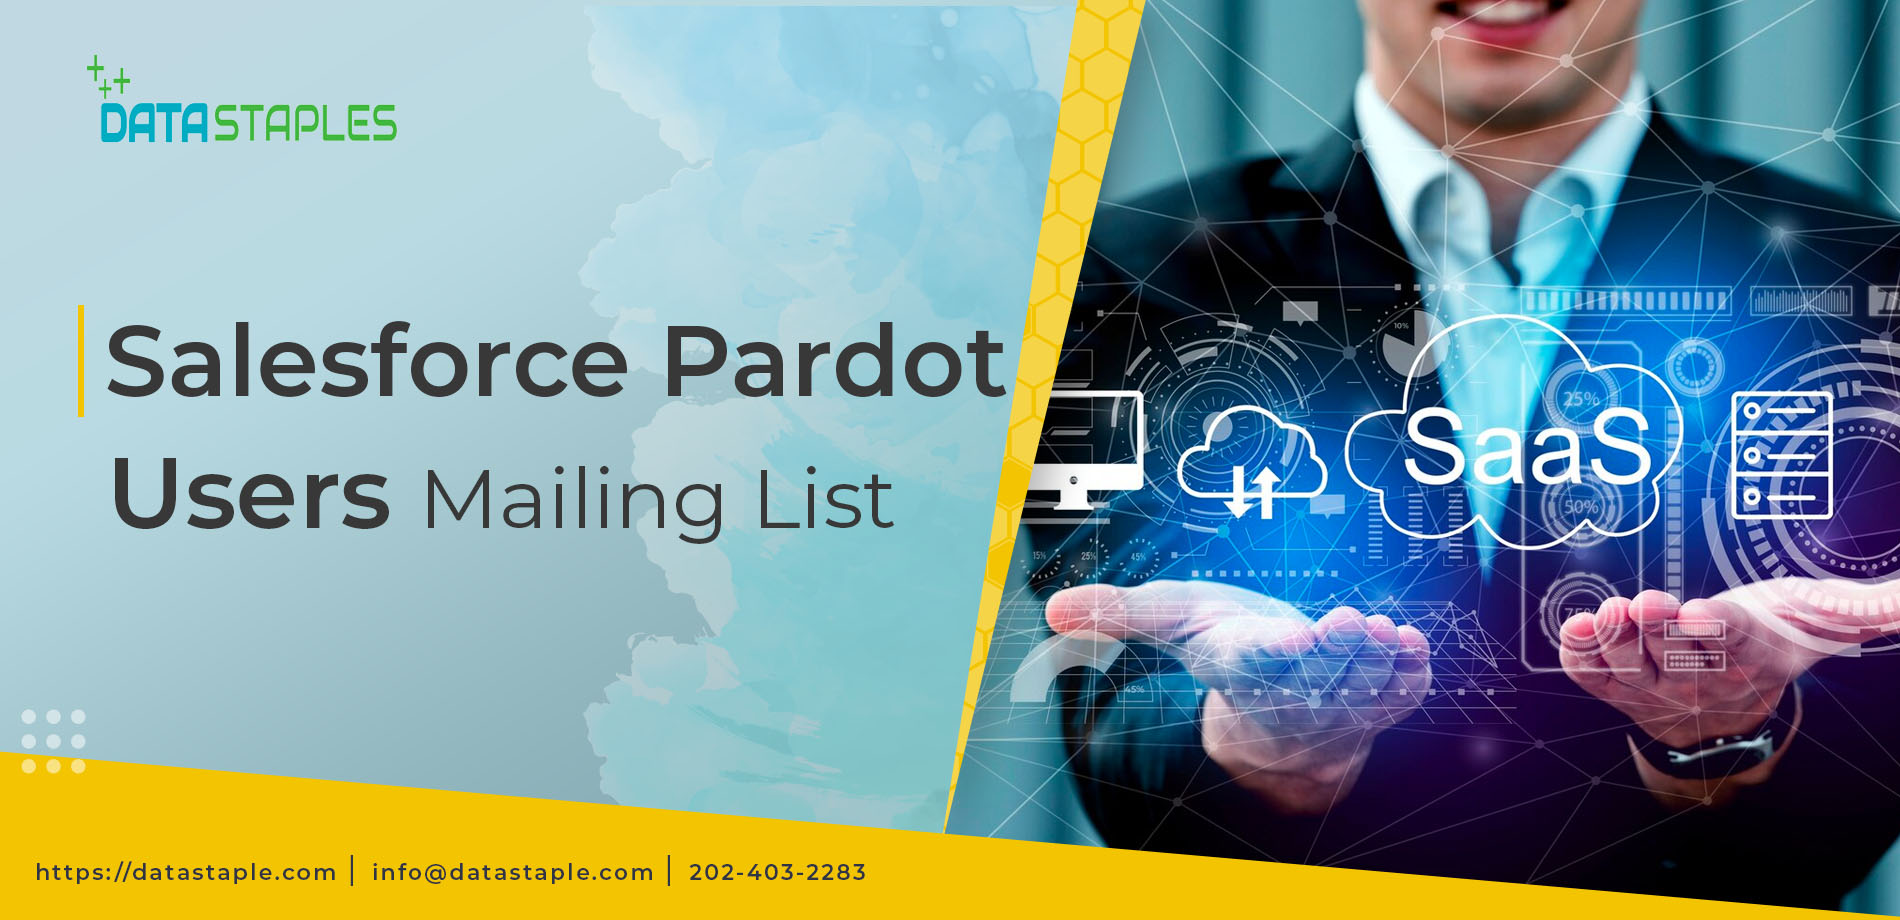 Salesforce Pardot Users Mailing List | DataStaples